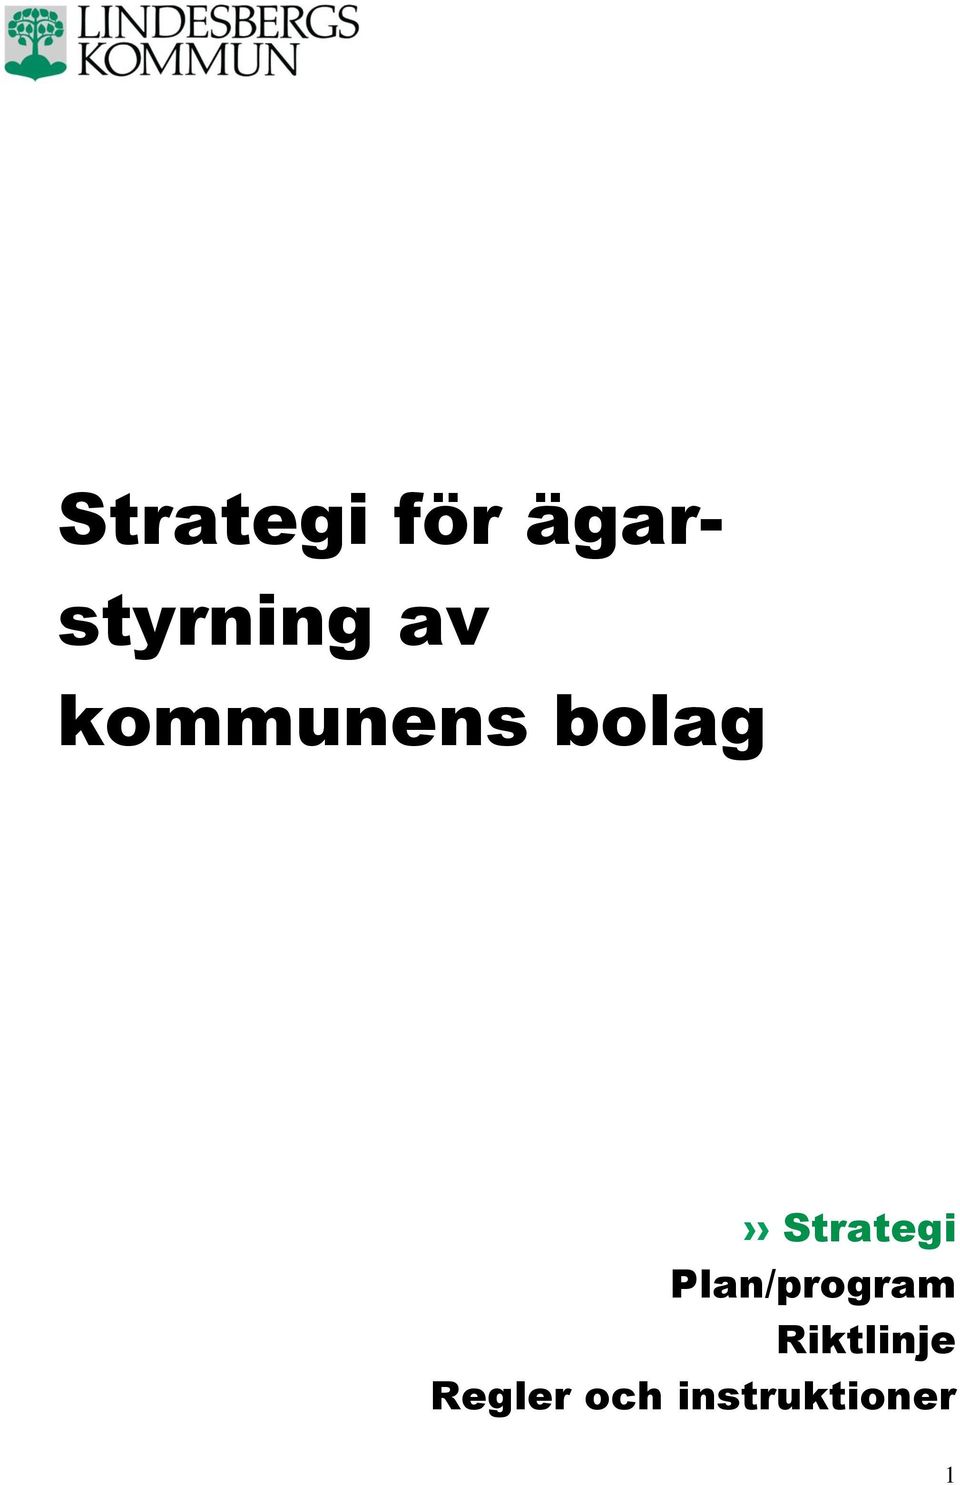 Strategi Plan/program